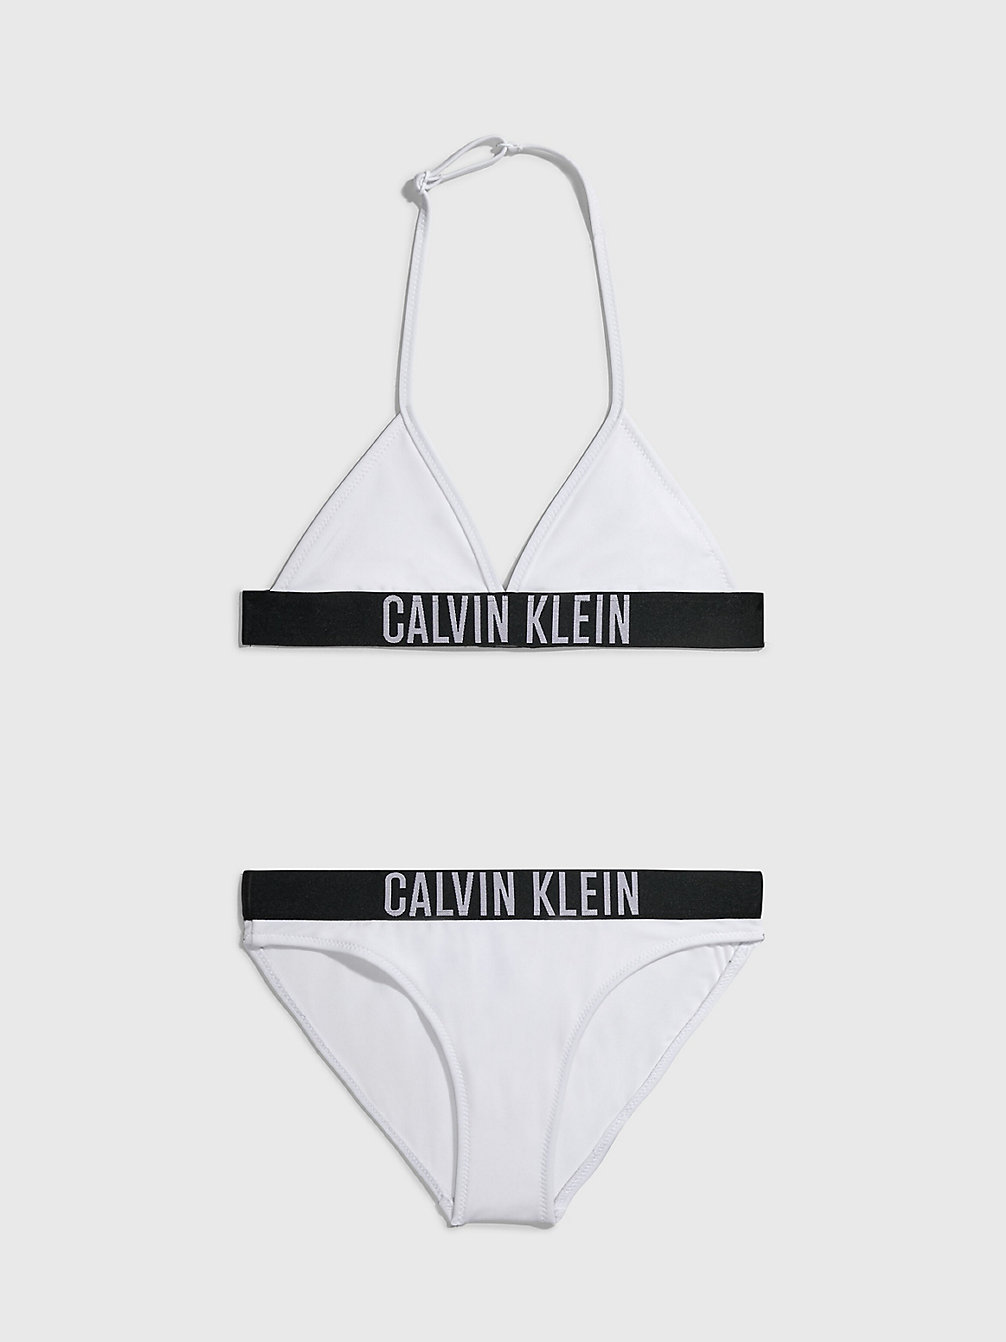 Bikini A Triangolo Bambina - Intense Power > PVH CLASSIC WHITE > undefined girls > Calvin Klein